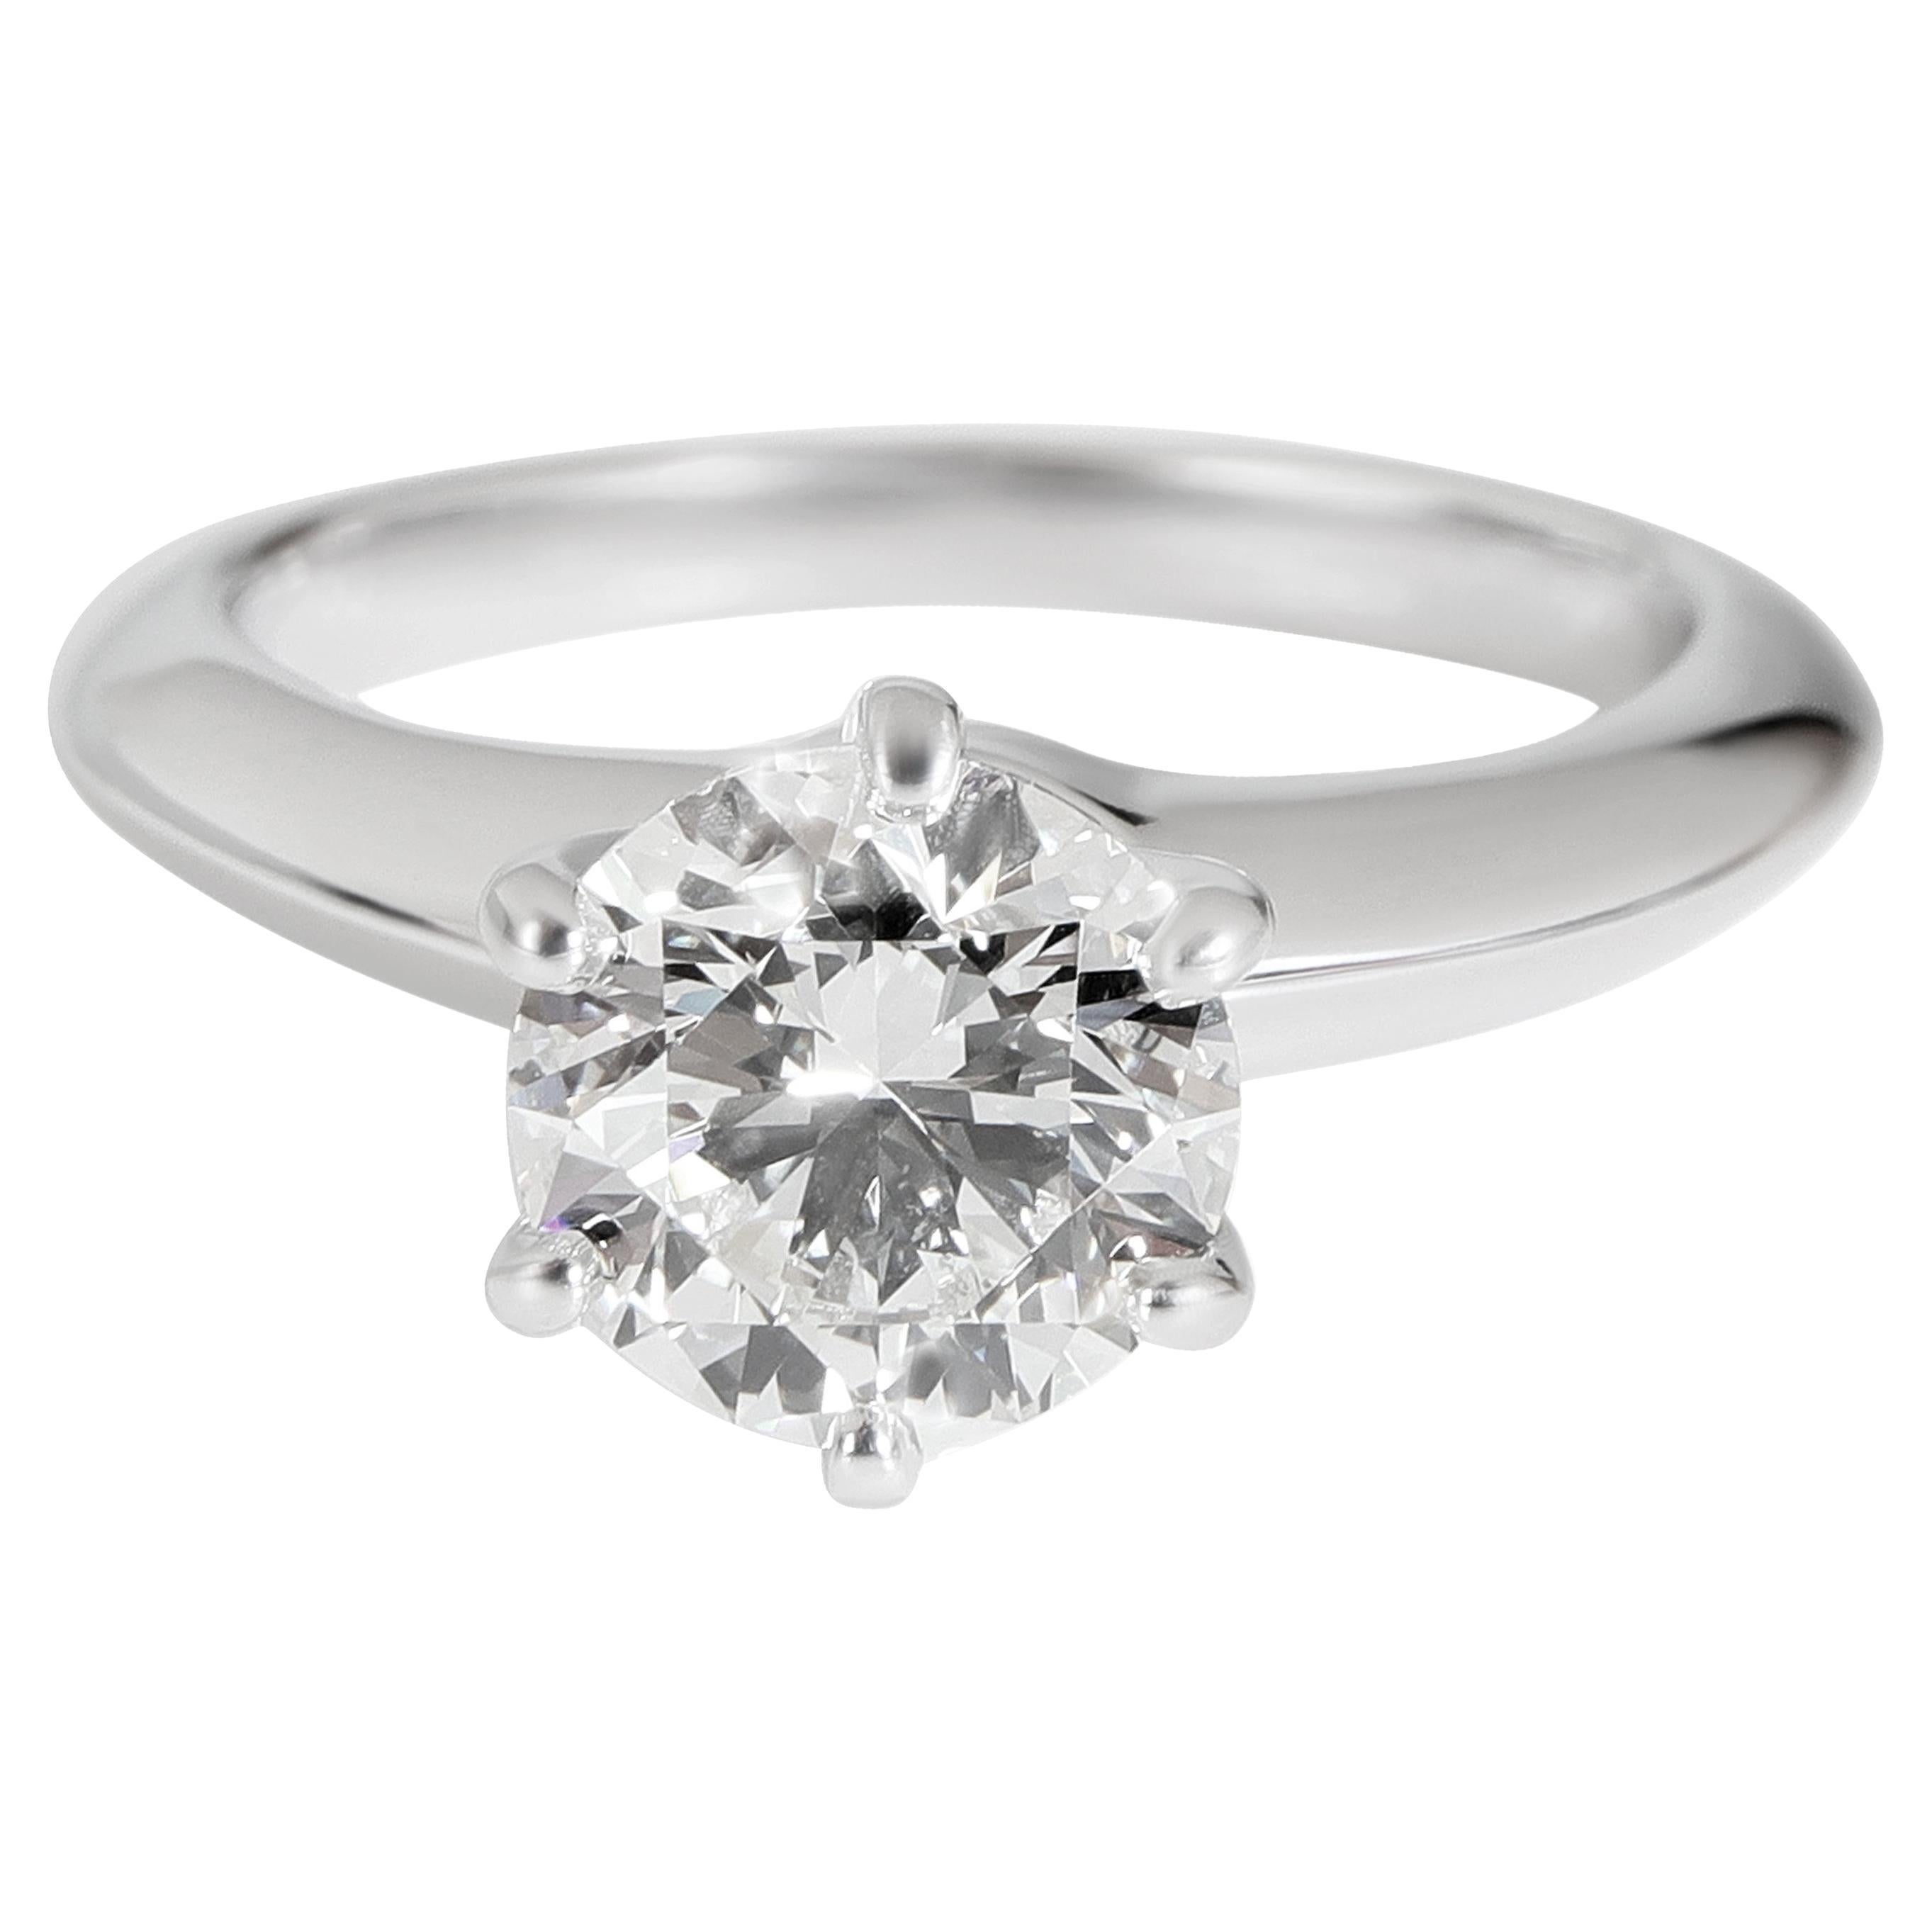 Tiffany & Co. Diamond Engagement Ring in Platinum G SI1 1.16 CTW